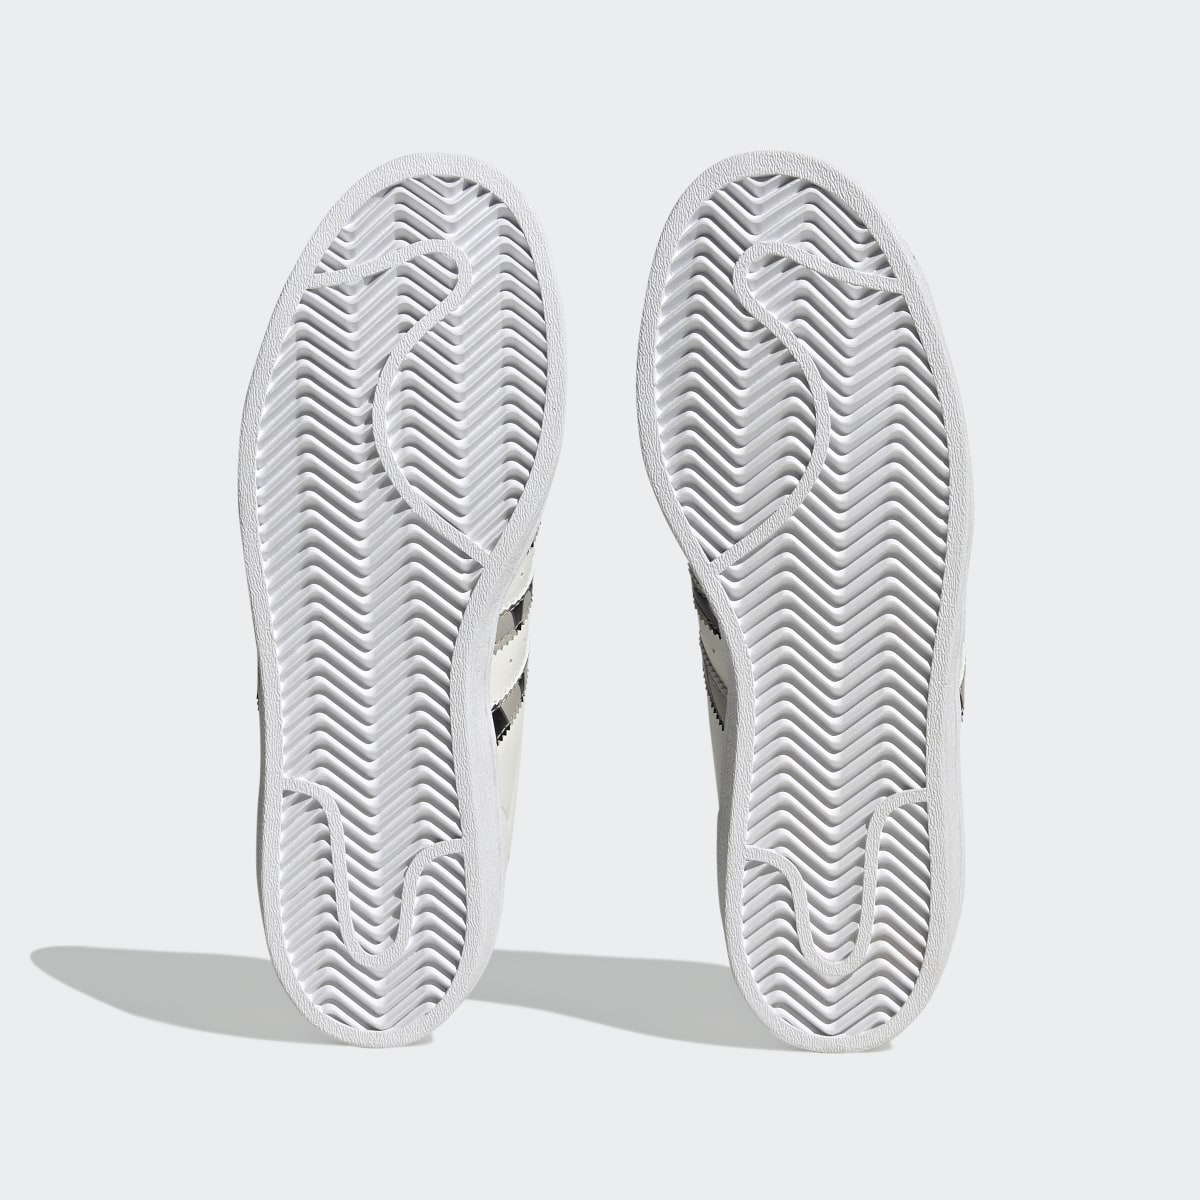 Adidas x Marimekko Superstar Shoes. 5